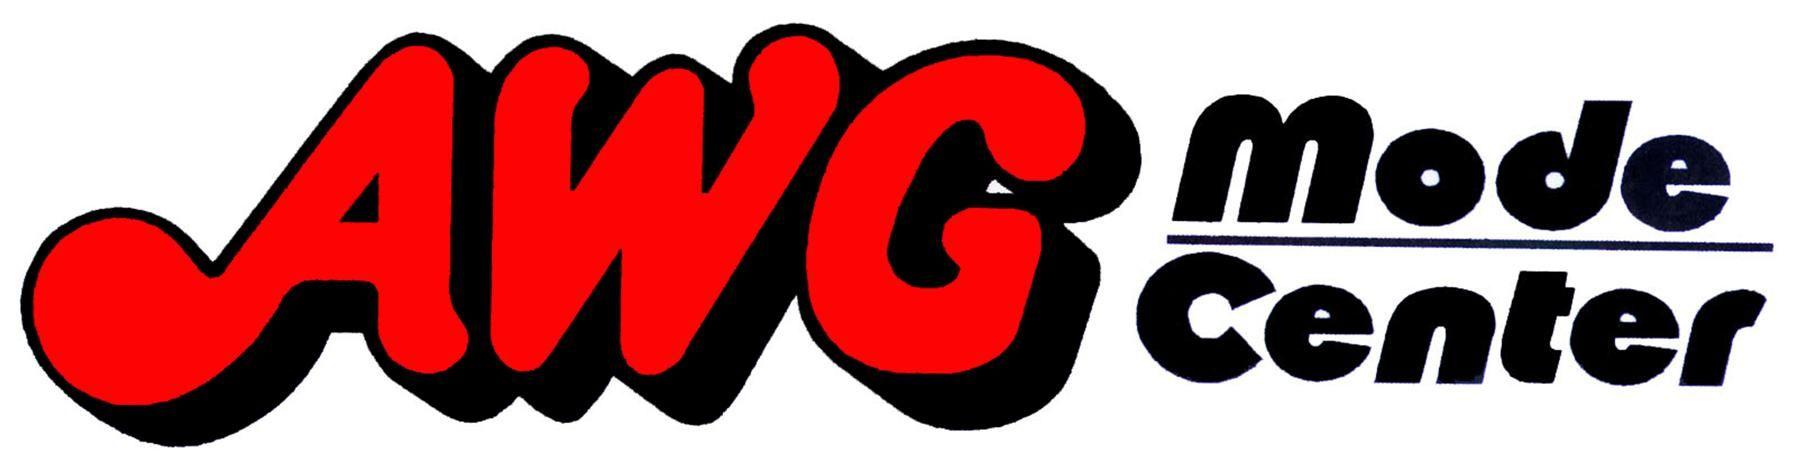 AWG Logo - Awg mode center Logos